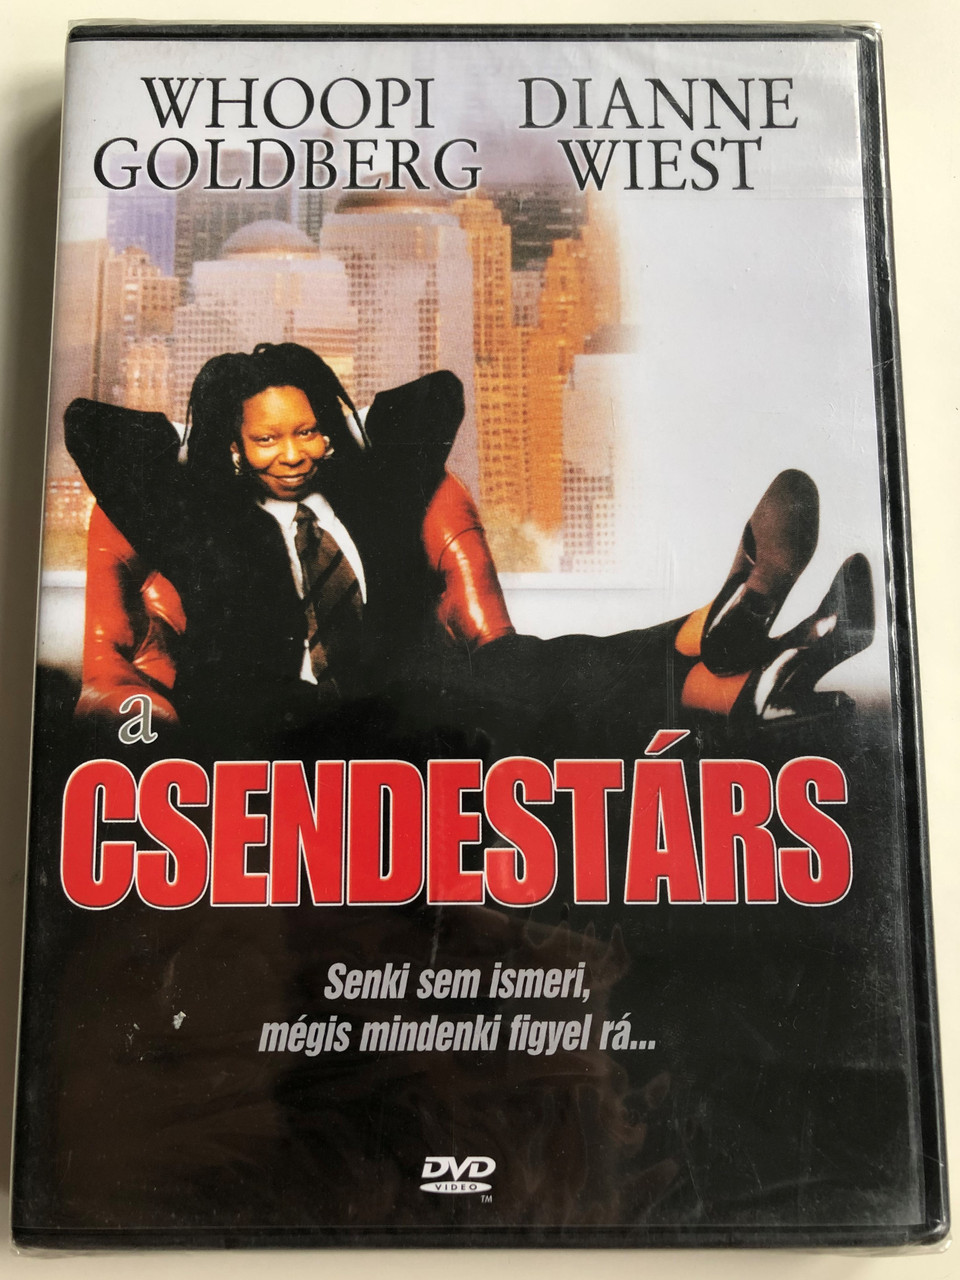 The Associate DVD 1996 A csendestárs / Directed by Donald Petrie /  Starring: Whoopi Goldberg, Dianne Wiest, Eli Wallach - bibleinmylanguage